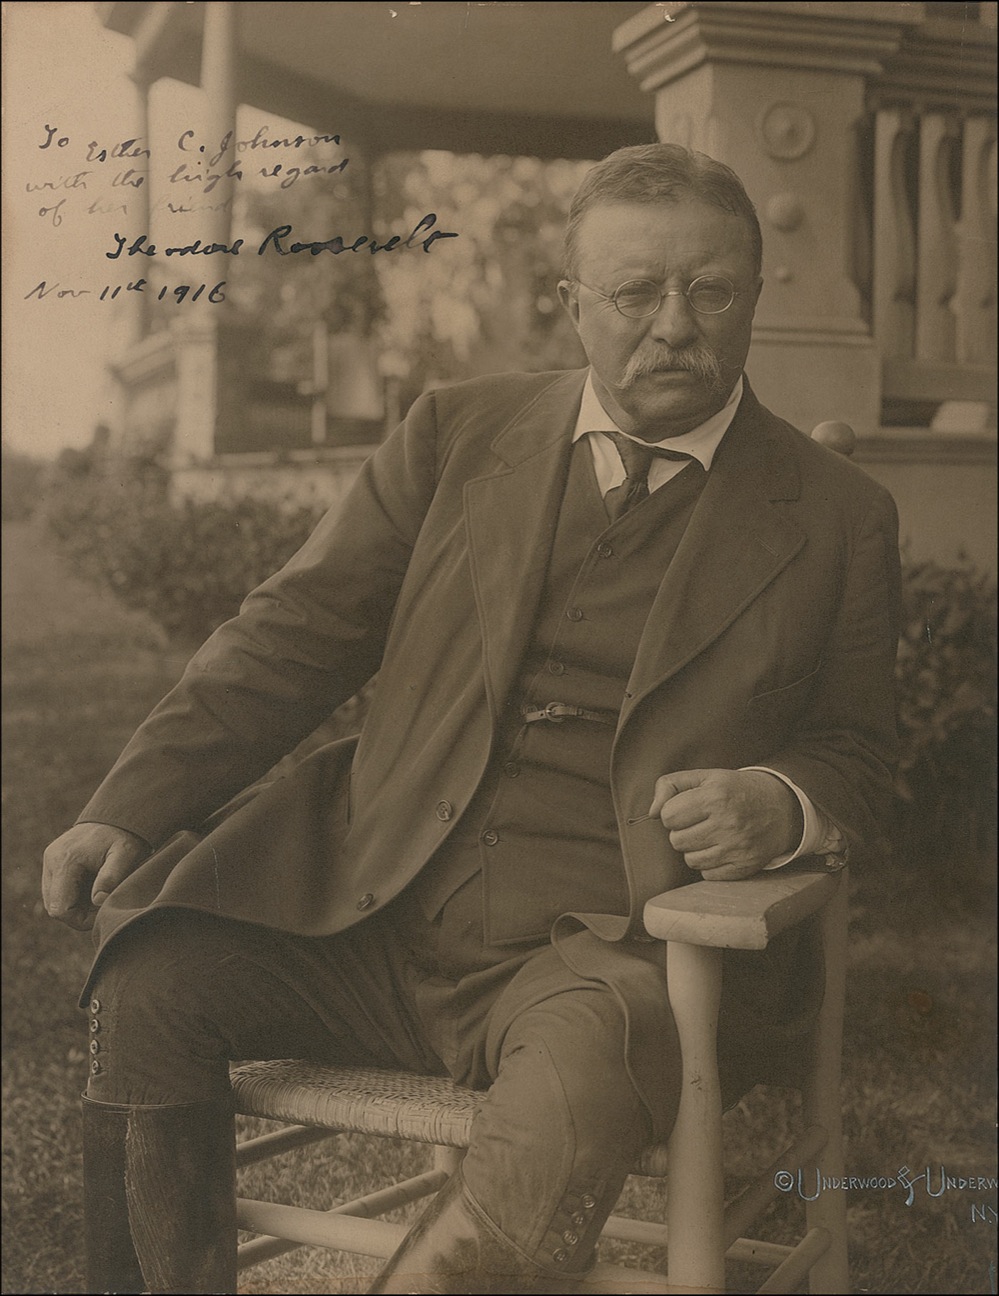 Lot #141 Theodore Roosevelt